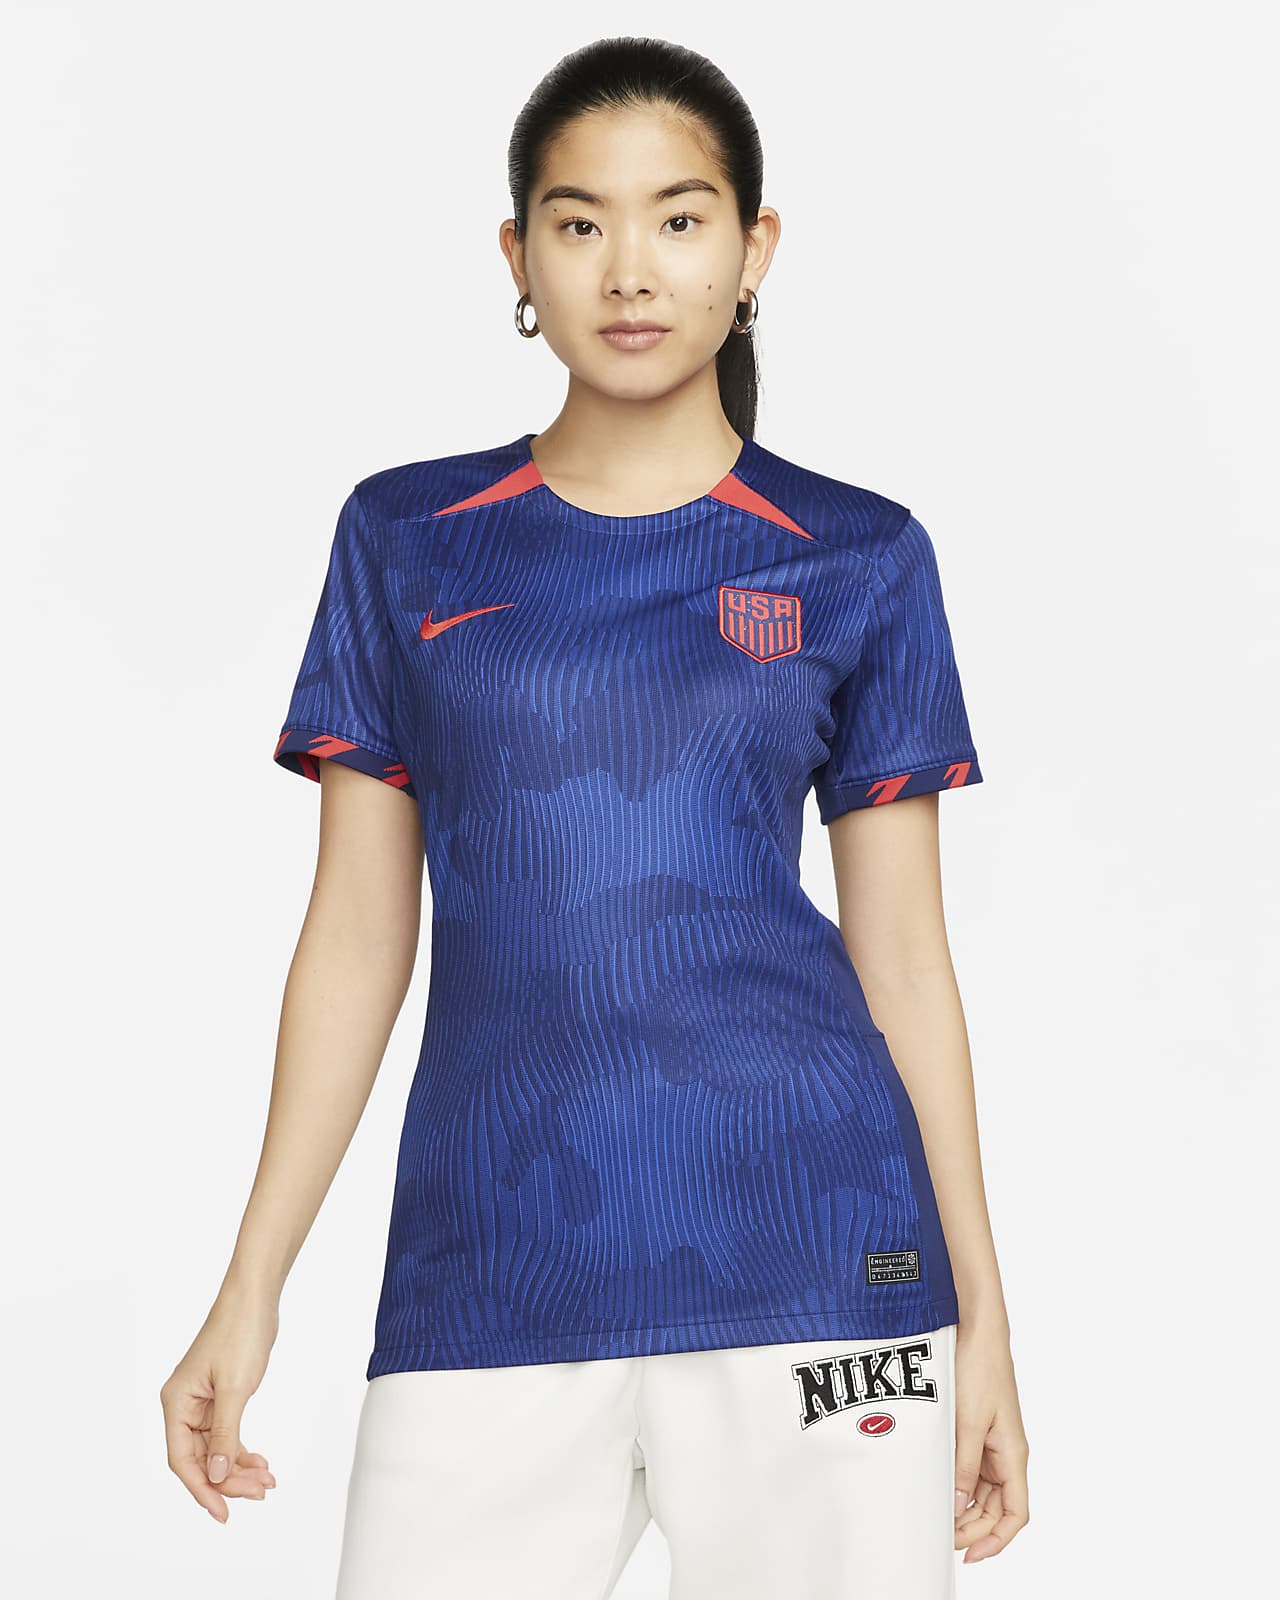 Nike Women's Large Brasil Brazil 2019 Stadium Away Soccer Jersey Slim Fit  for sale online